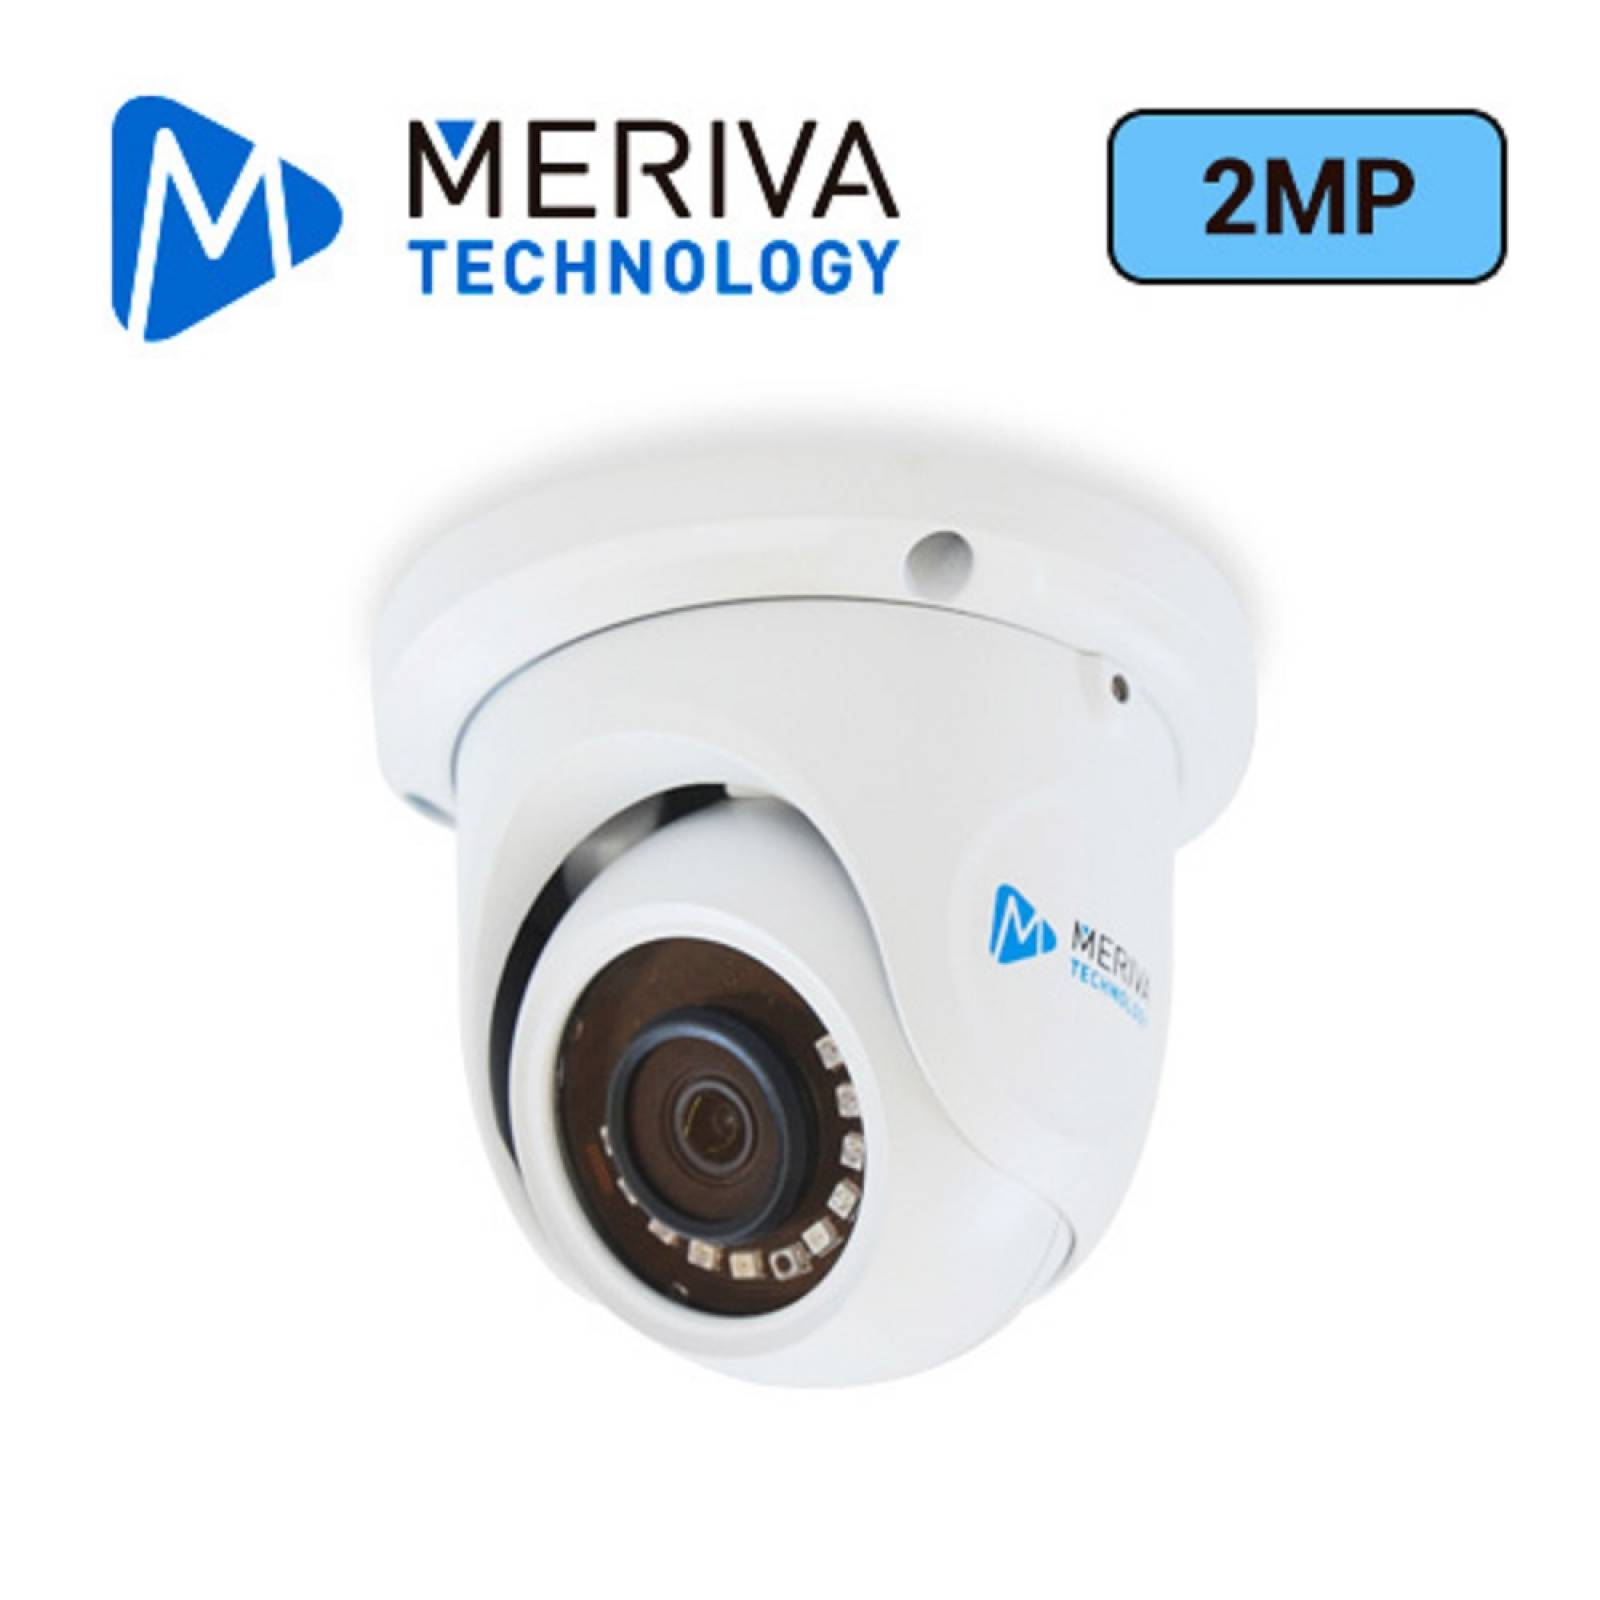 Cámara CCTV Domo Meriva Technology 1080p CMOS MBASHD3202